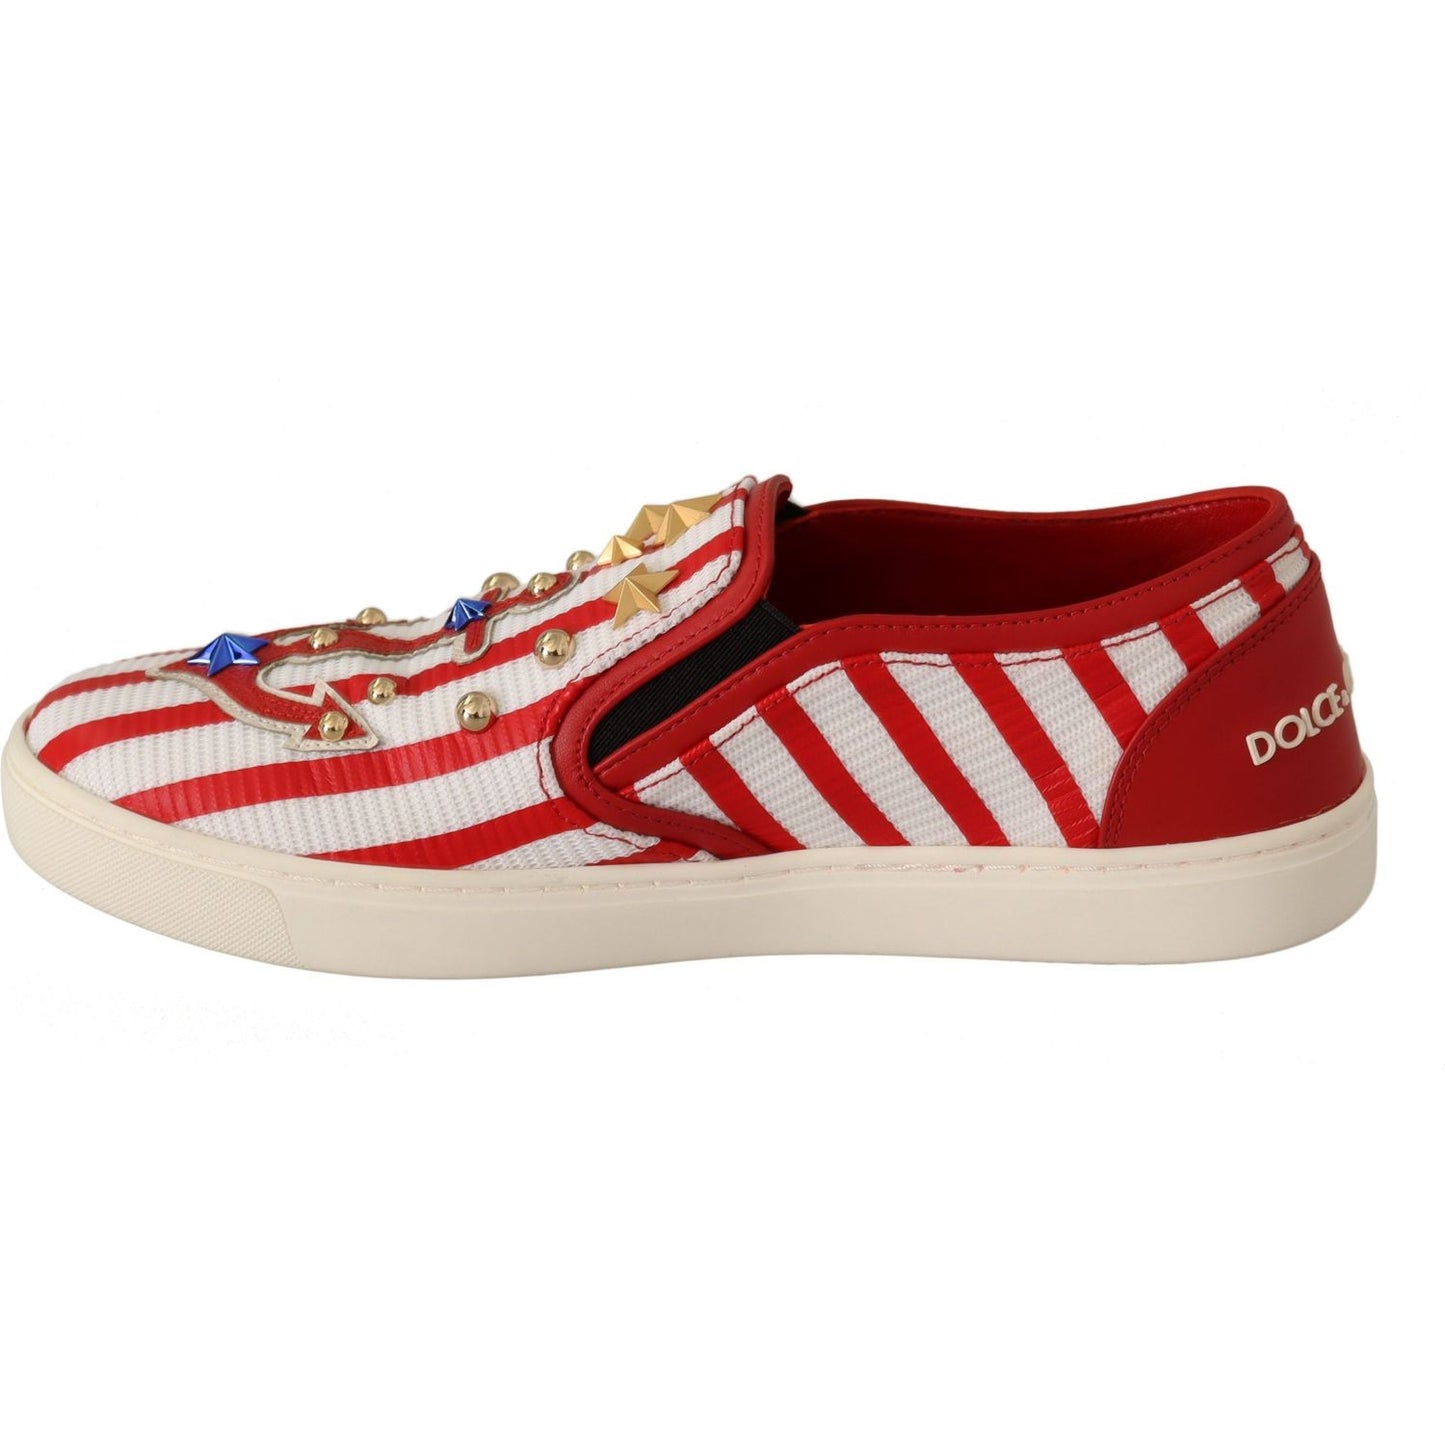 Dolce & Gabbana Stripe Print Studded Loafers WOMAN LOAFERS red-white-anchor-studded-loafers-shoes